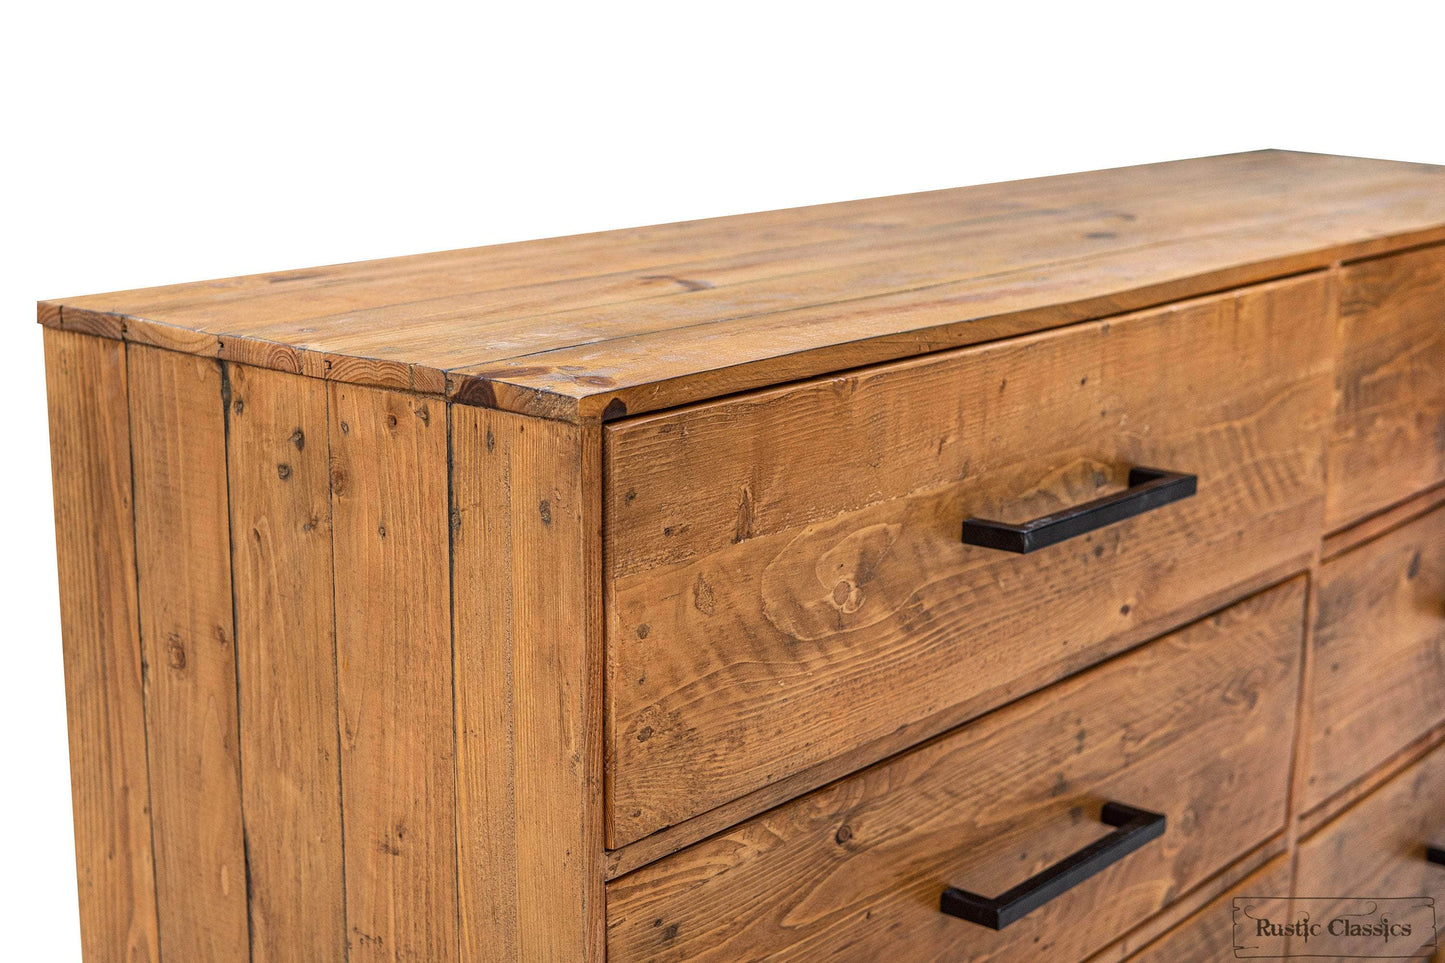 Rustic Classics Dresser Cypress Reclaimed Wood 6 Drawer Dresser in Spice